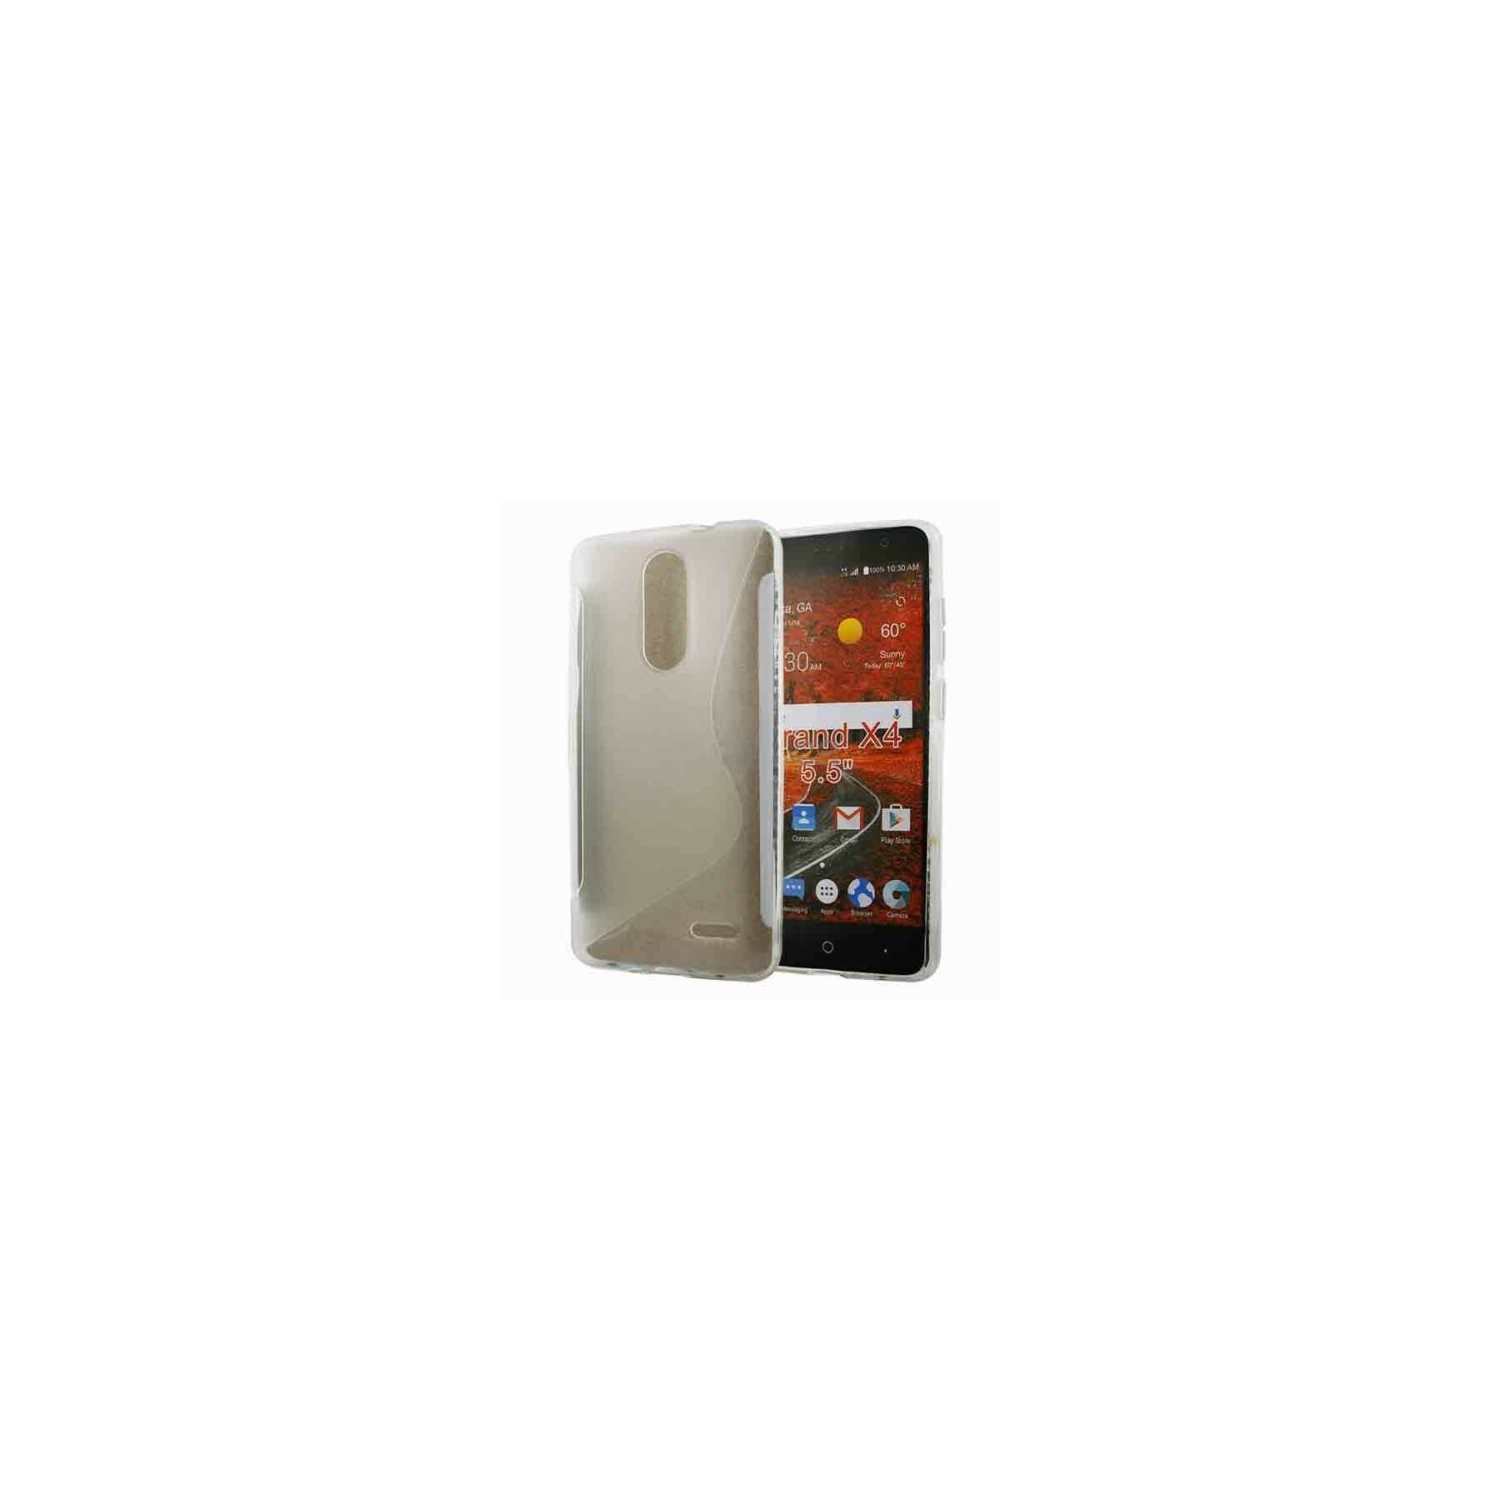 【CSmart】 Ultra Thin Soft TPU Silicone Jelly Bumper Back Cover Case for ZTE Grand X4, Clear